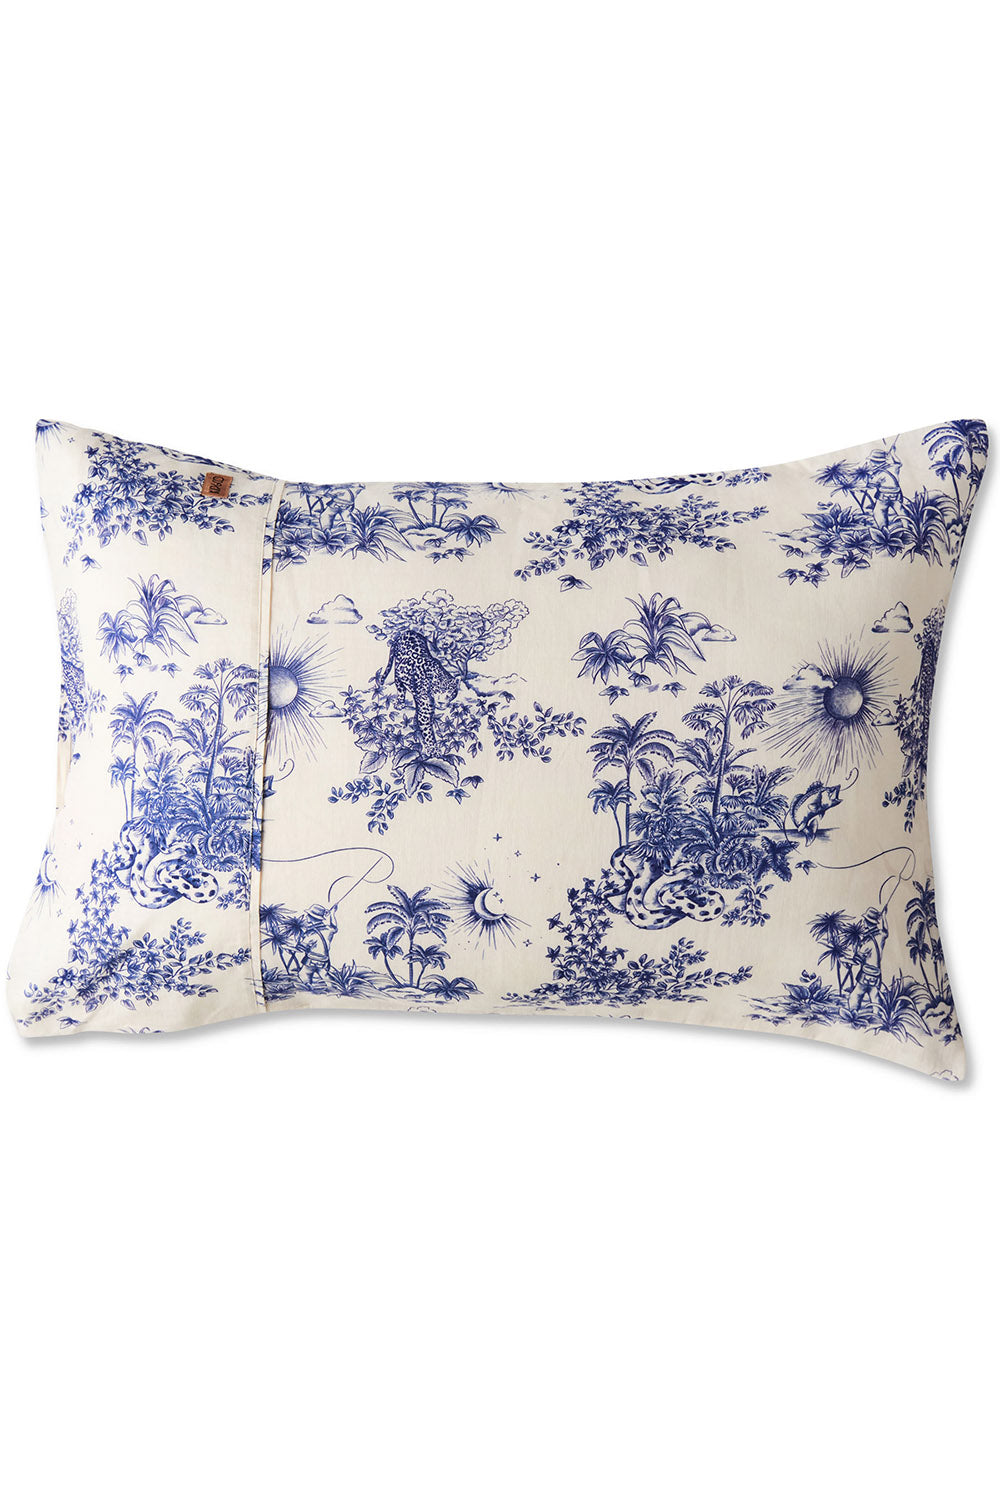 KIP & CO | Bahamas Linen Pillowcases 2pc - Standard